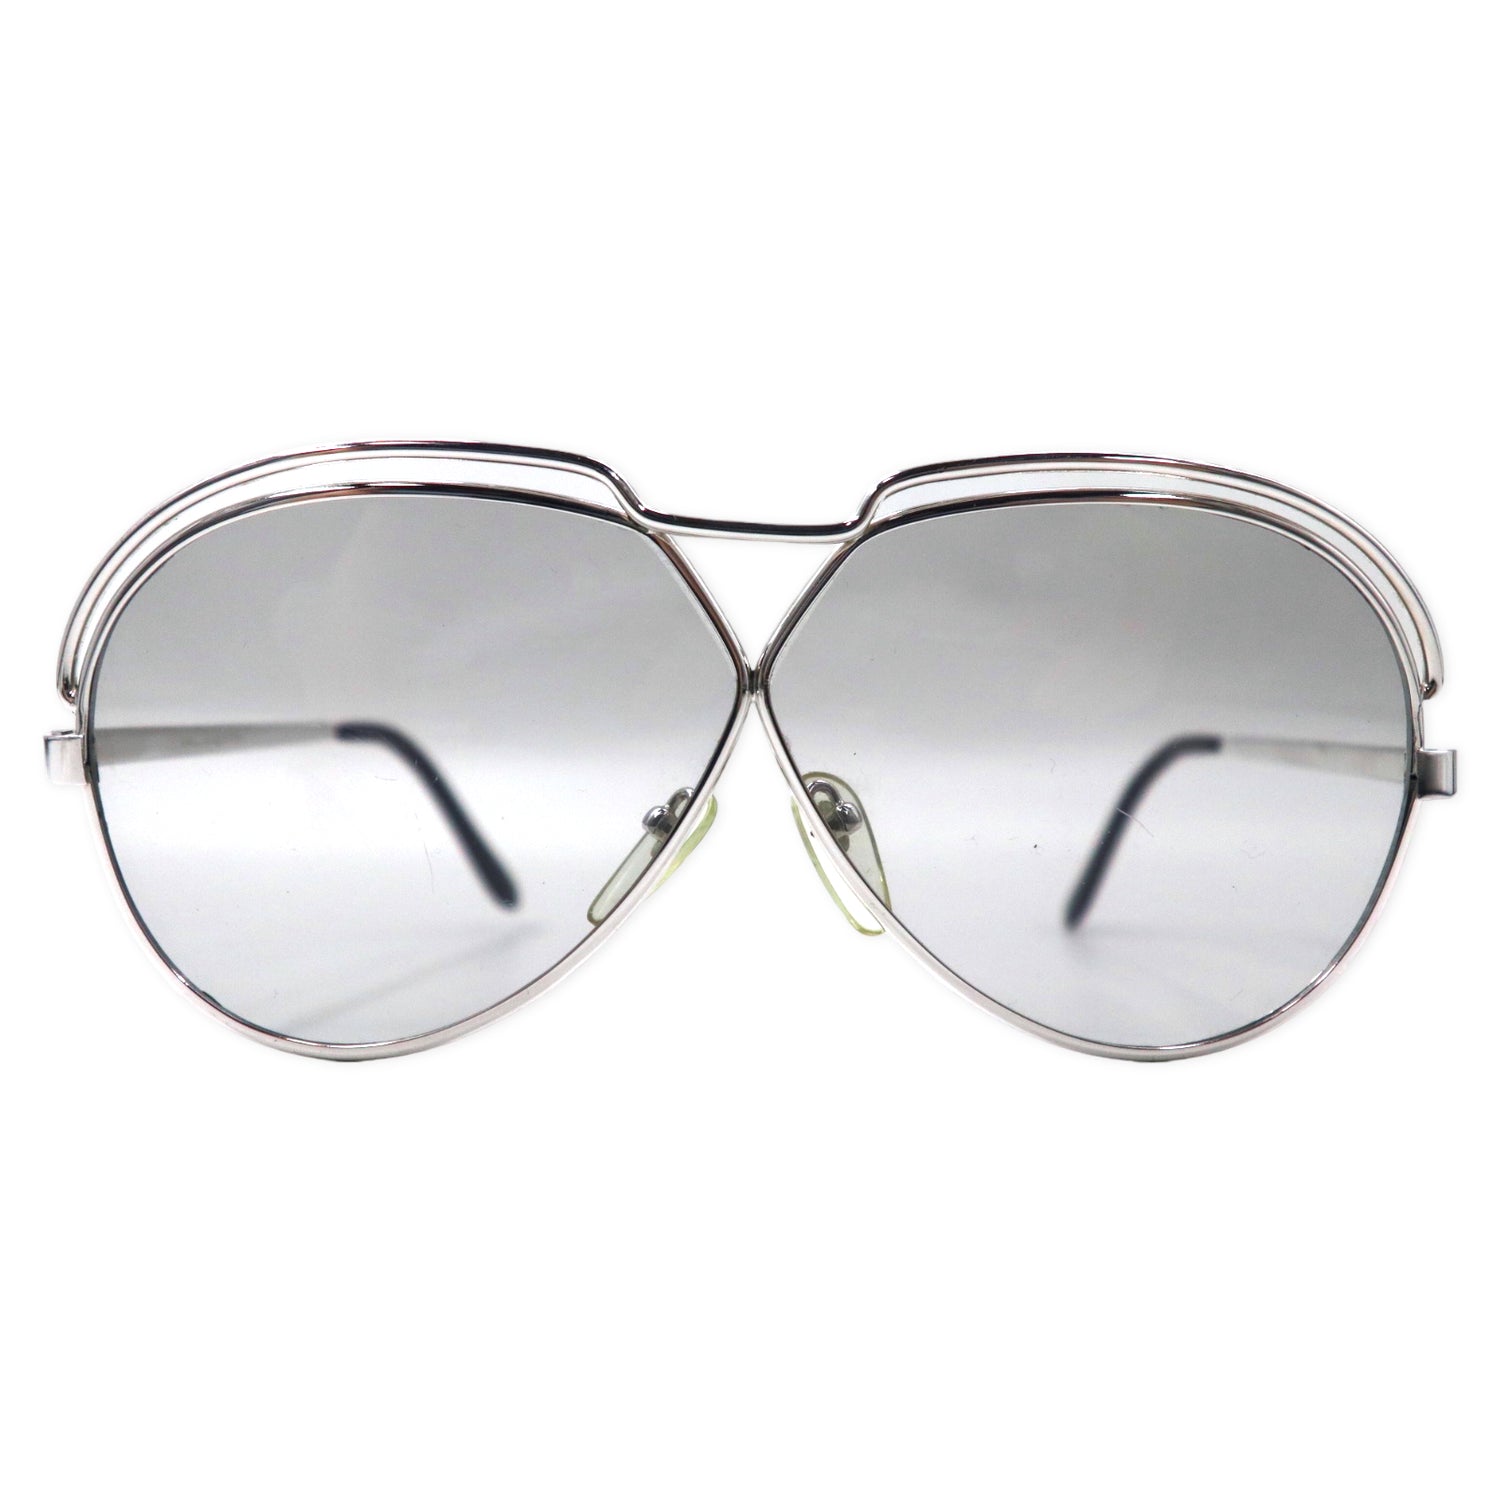 Yves Saint Laurent Sunglasses Tear Drop Silver Metal Frame Vintage 